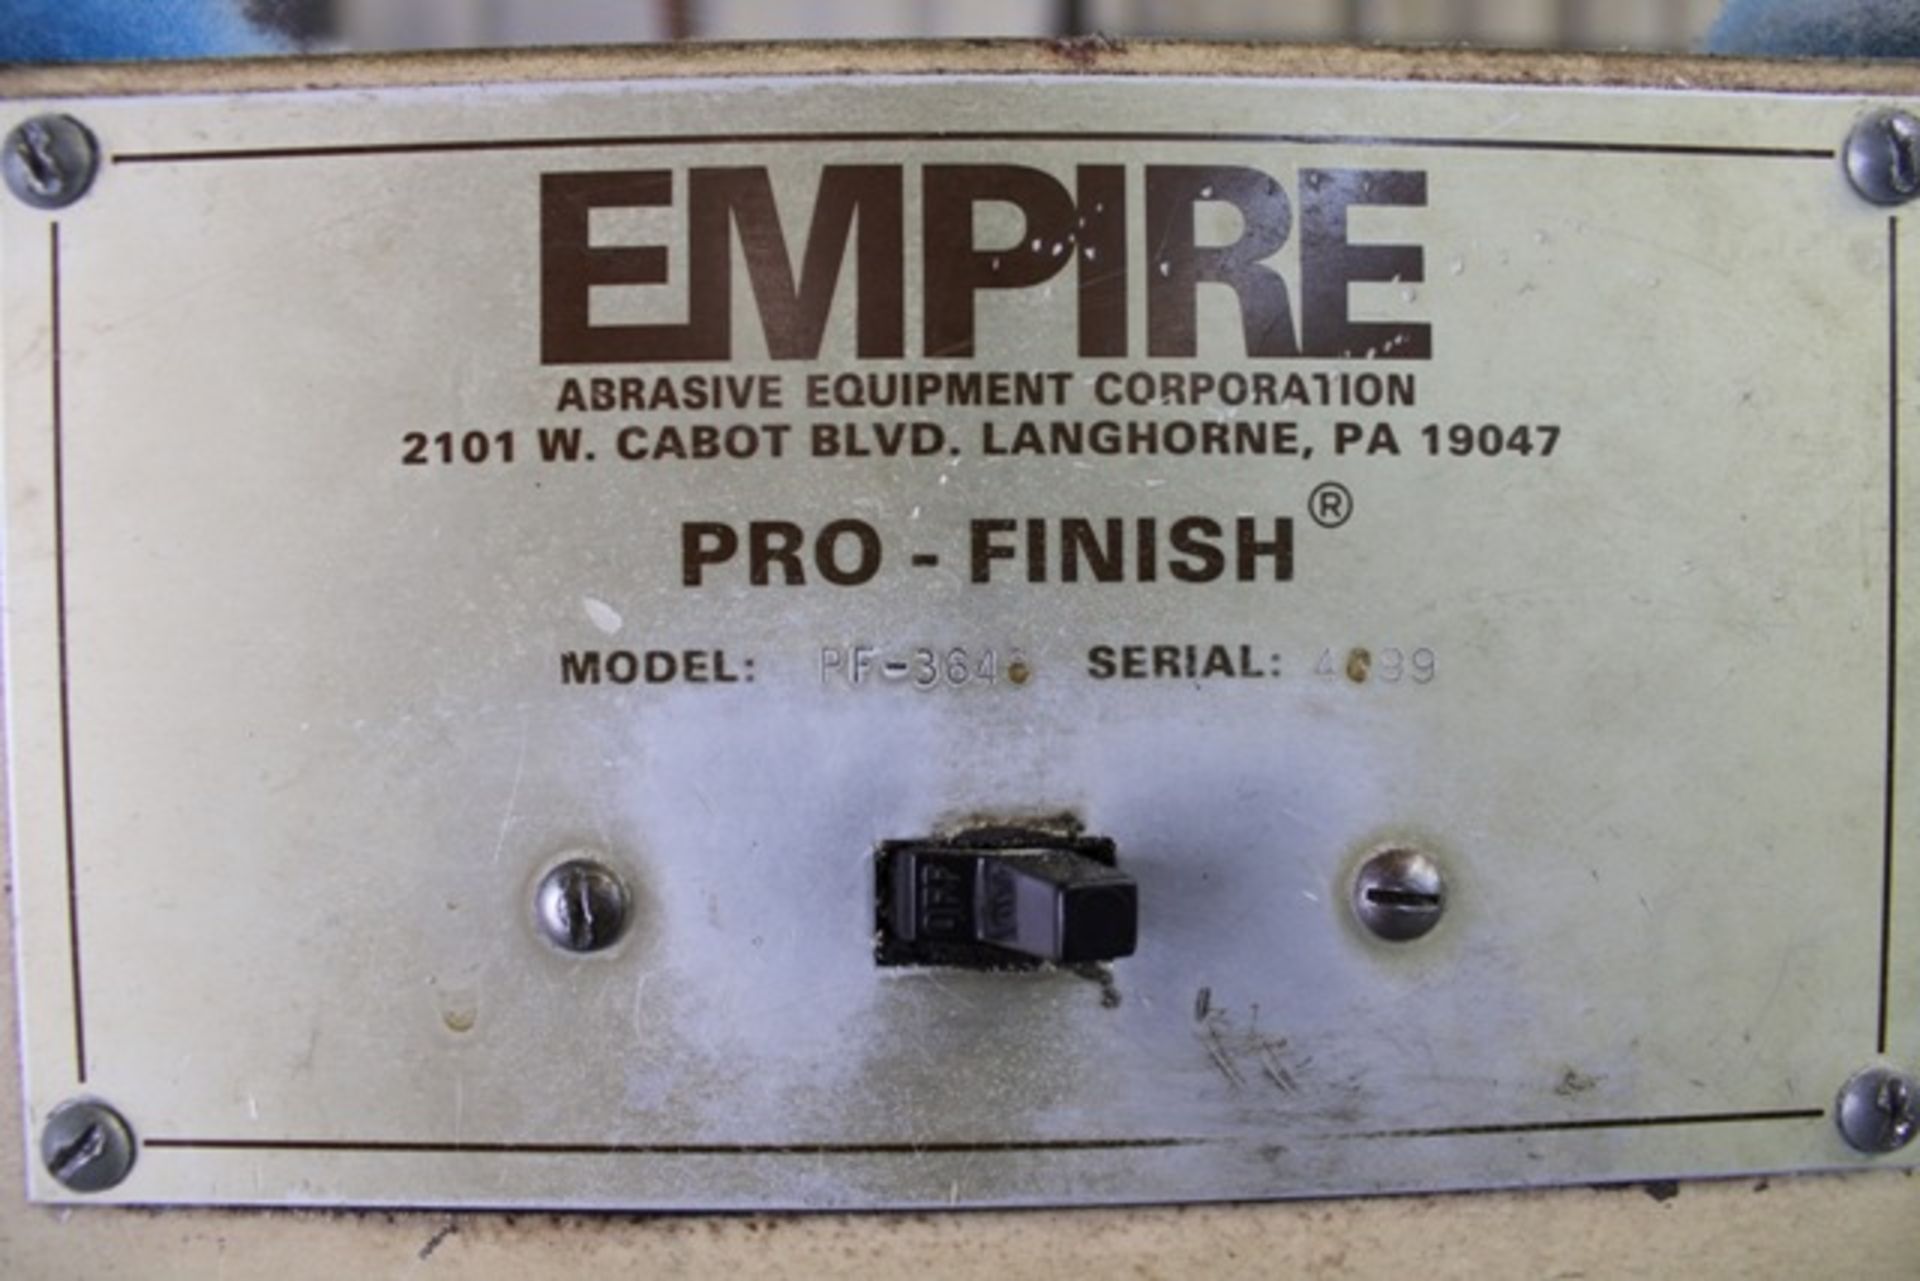 Empire Pro-Finish PF-3648 Abrasive Blast Machine - Image 4 of 4